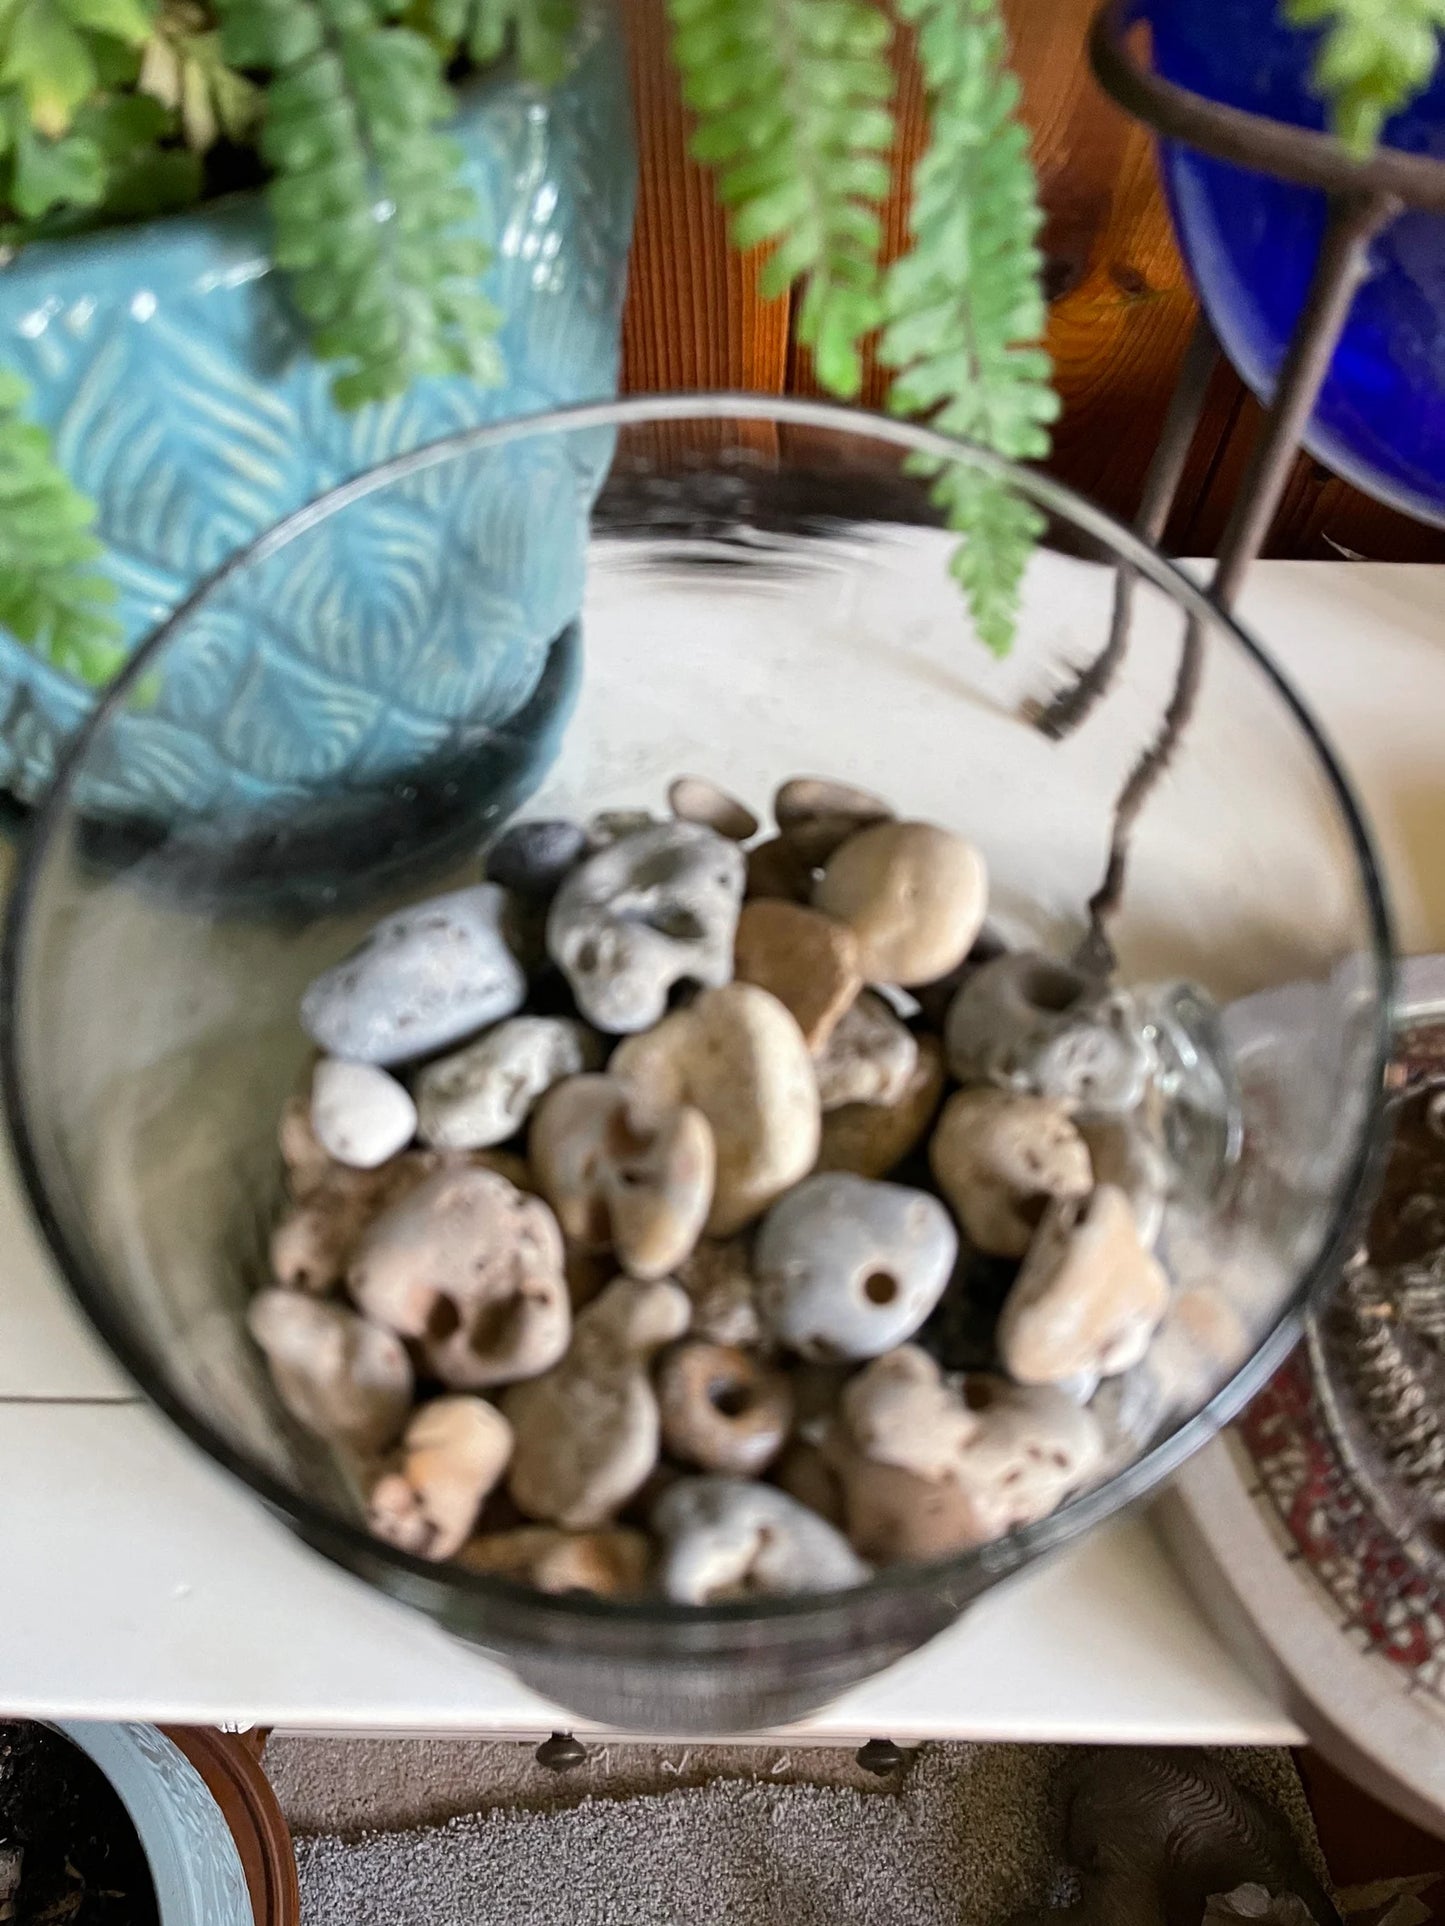 Medusa Head Jar Cover Vintage Glass with Beach Stones, Bodhi Vintage